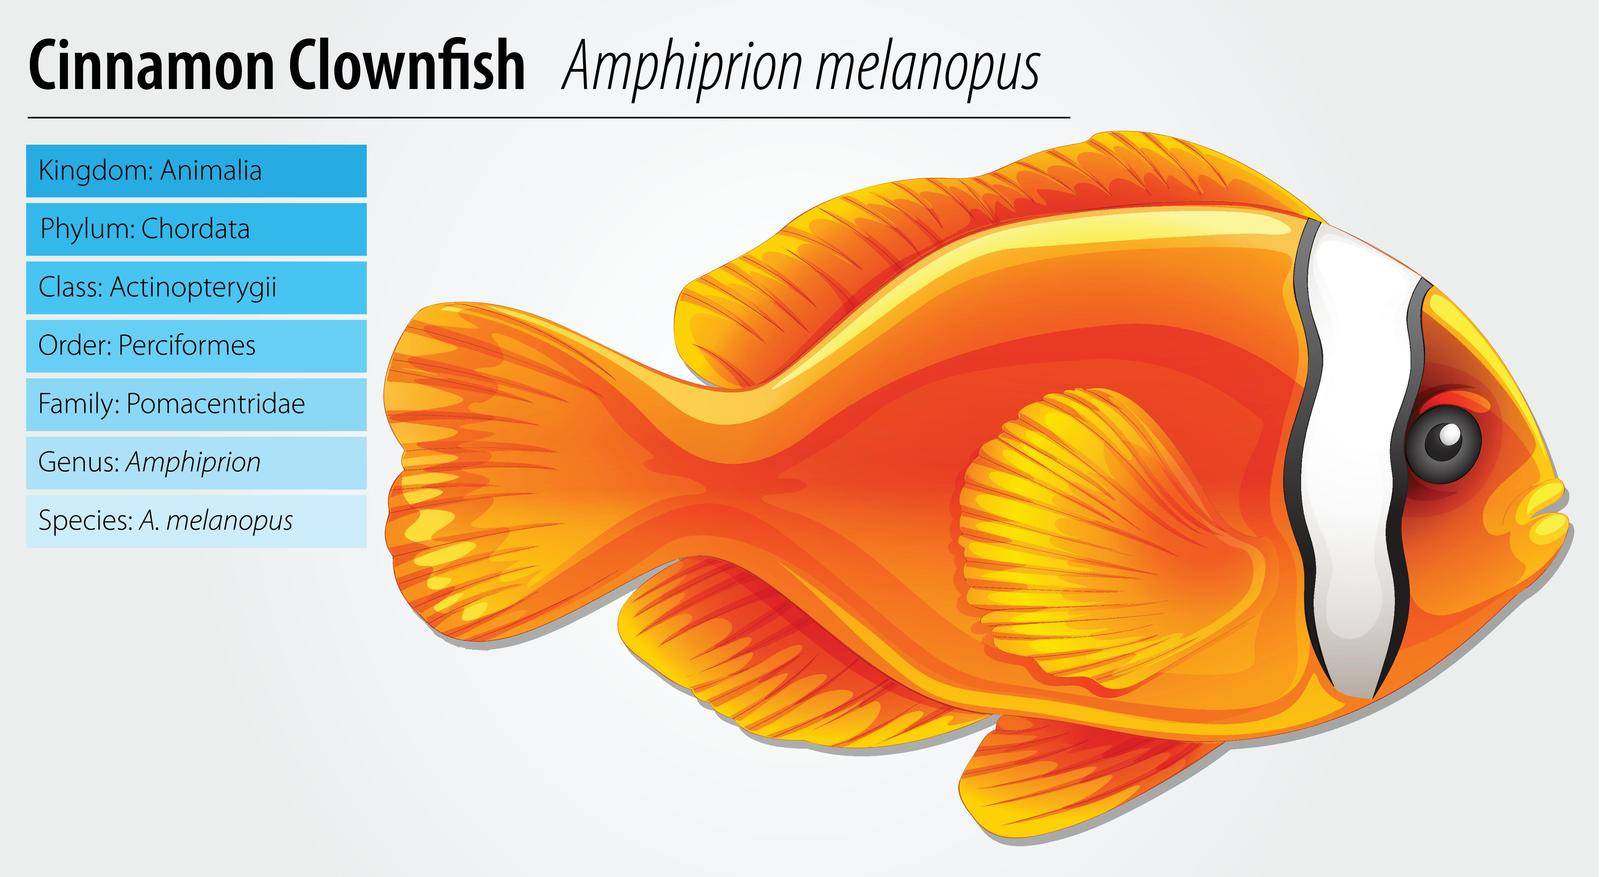 Cinnamon clownfish - Amphiprion melanopus